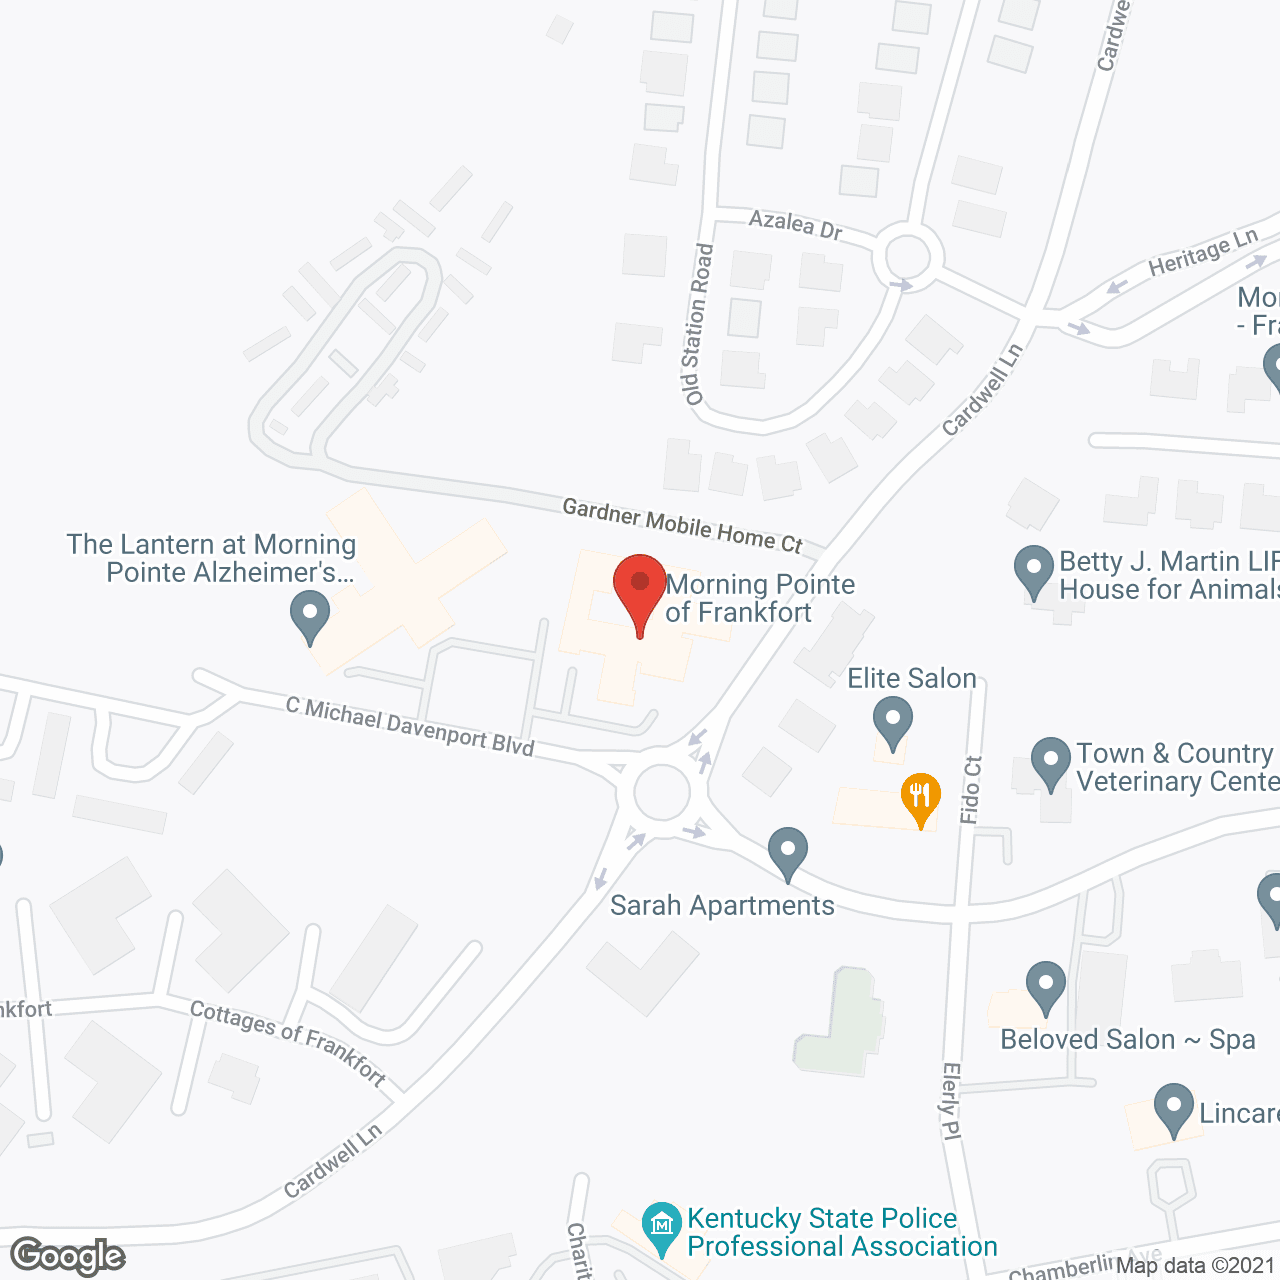 The Neighborhood of Frankfort in google map